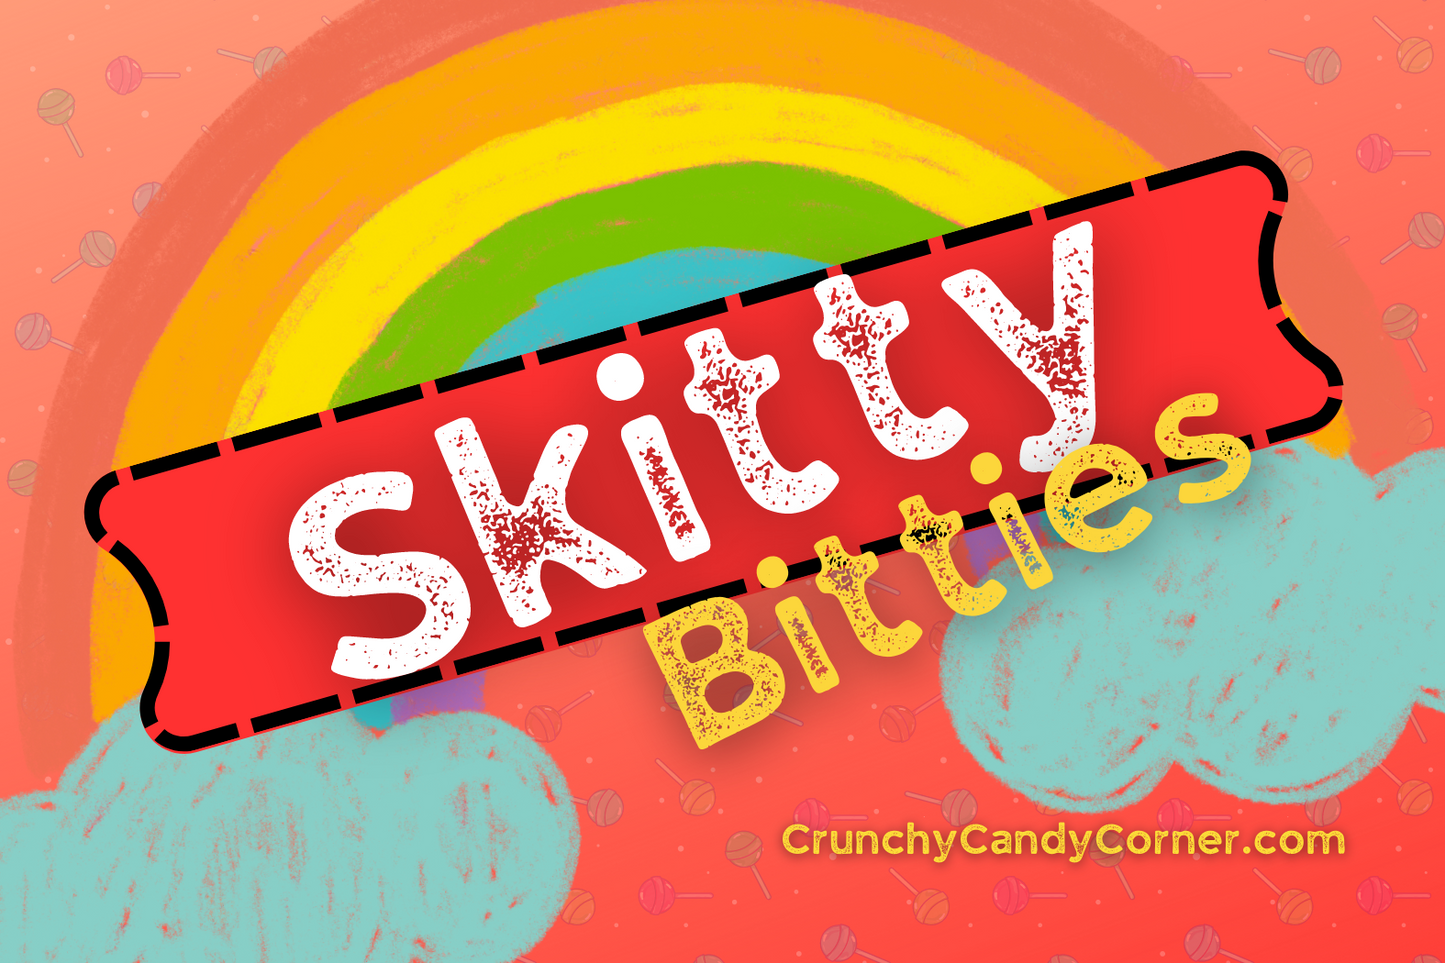 Skitty Bitties Freeze Dried Candy! 5X8in Bag